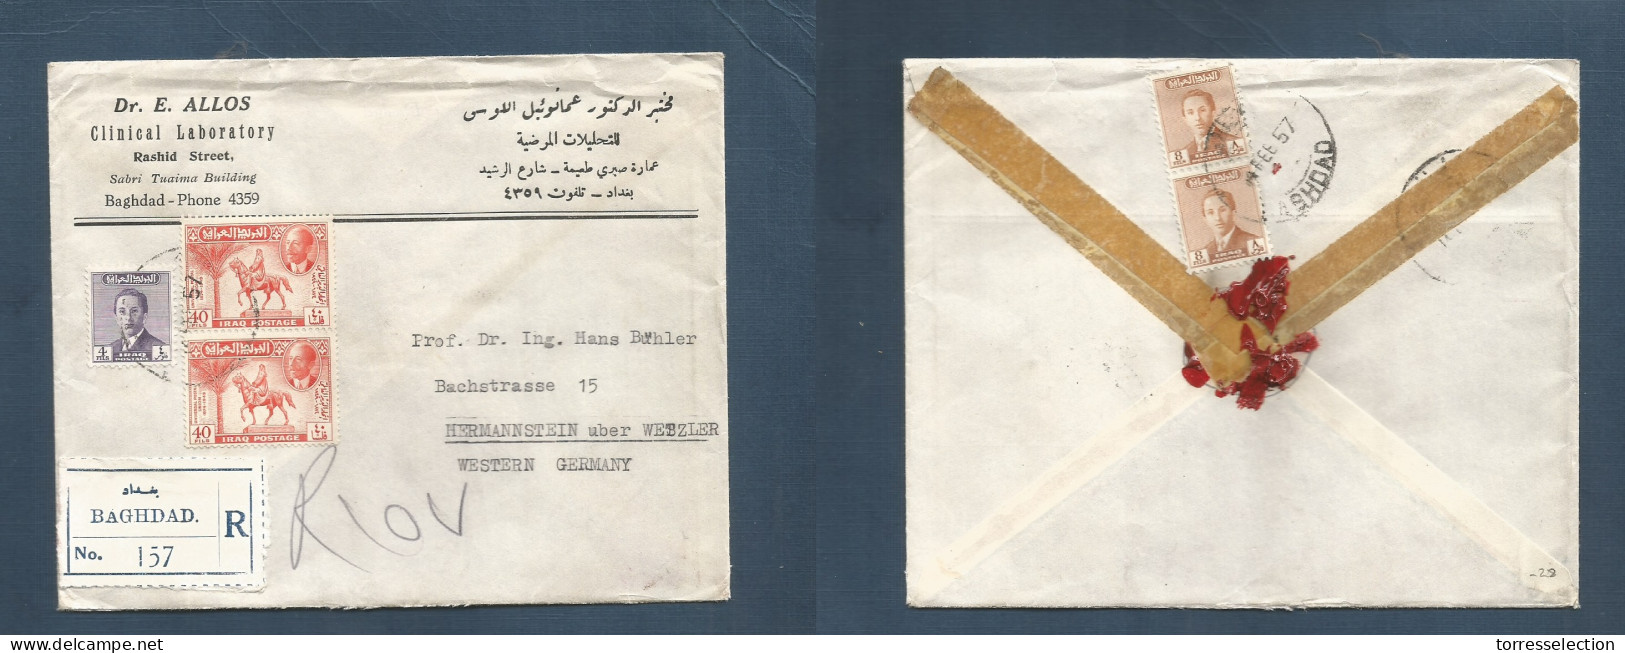 IRAQ. 1957 (14 Febr) Baghdad - West Germany, Hermannstein. Registered Multifkd Env At 84 Fils Rate. Clinical Laboratory. - Irak